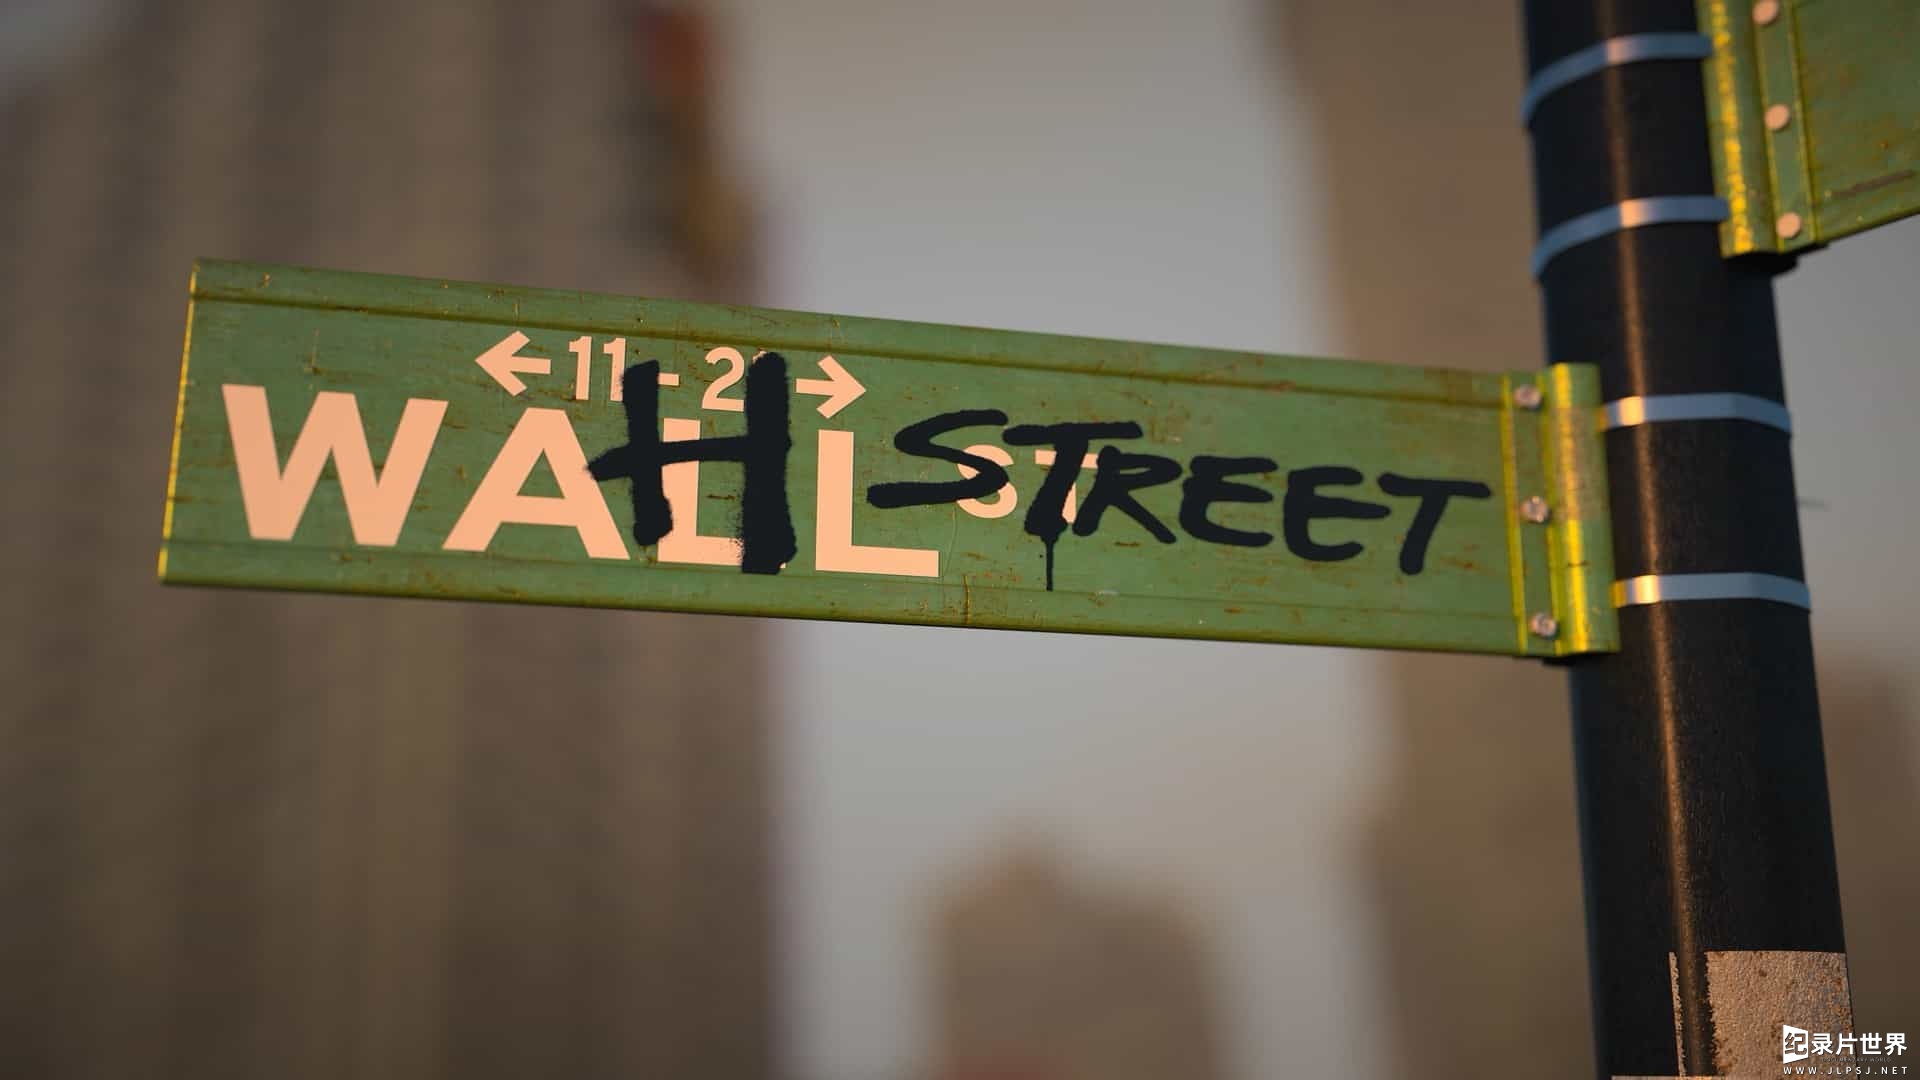 HBO纪录片《沃尔街 Wahl Street 2021》全6集